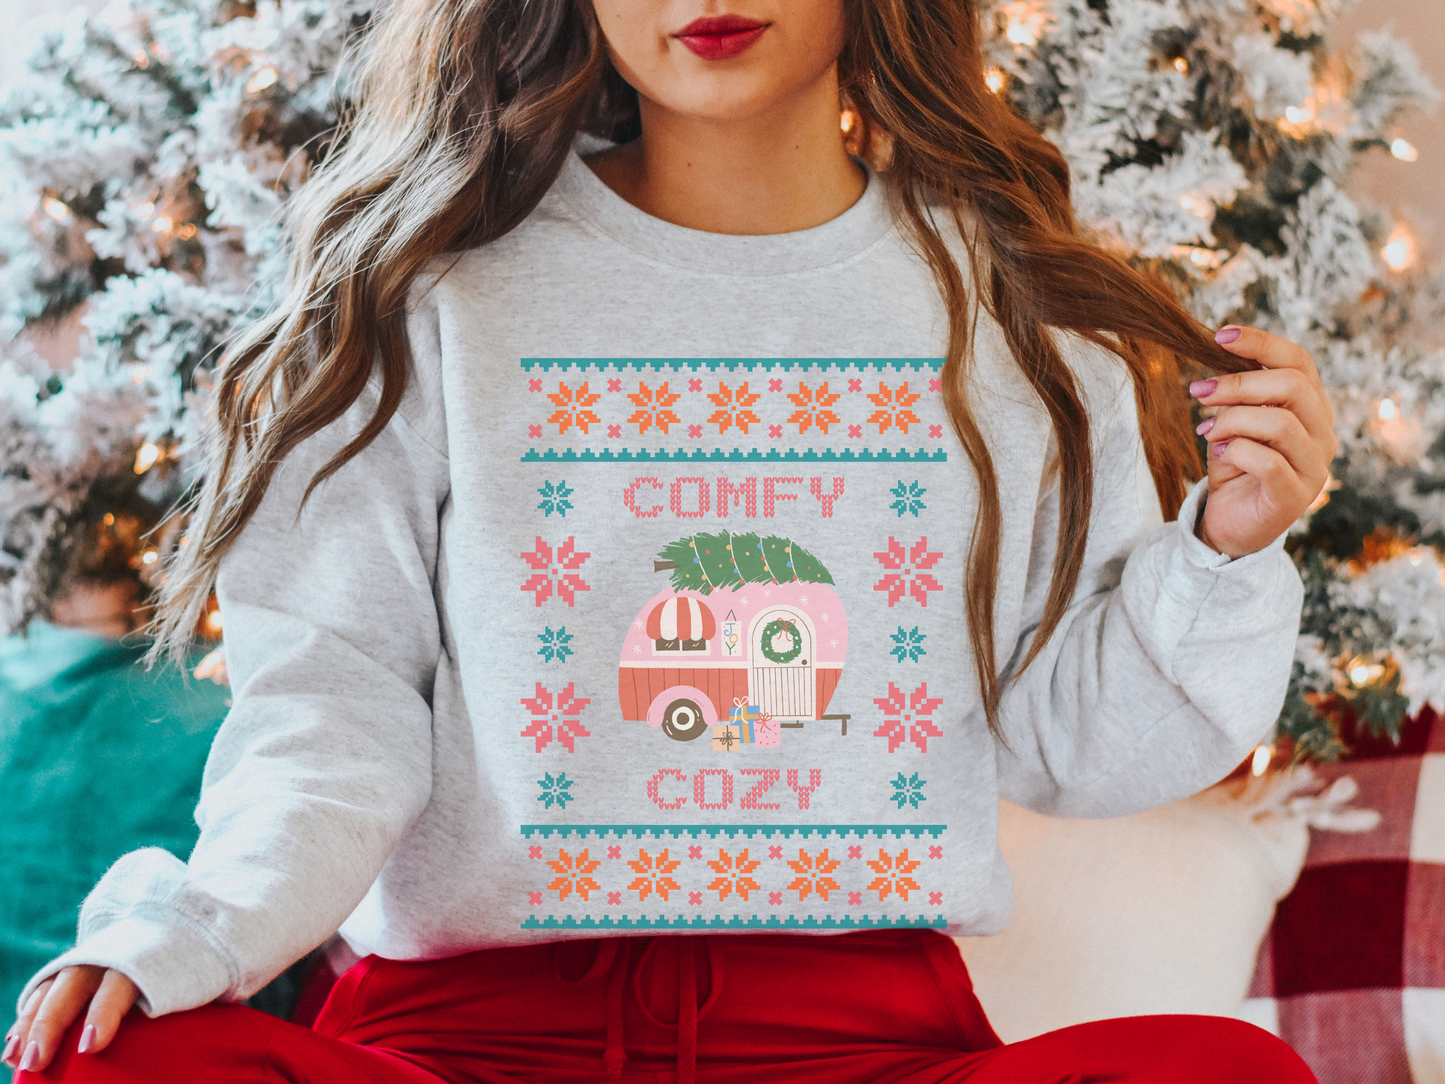 Comfy Cozy Retro Camper Ugly Christmas Sweater Sweatshirt